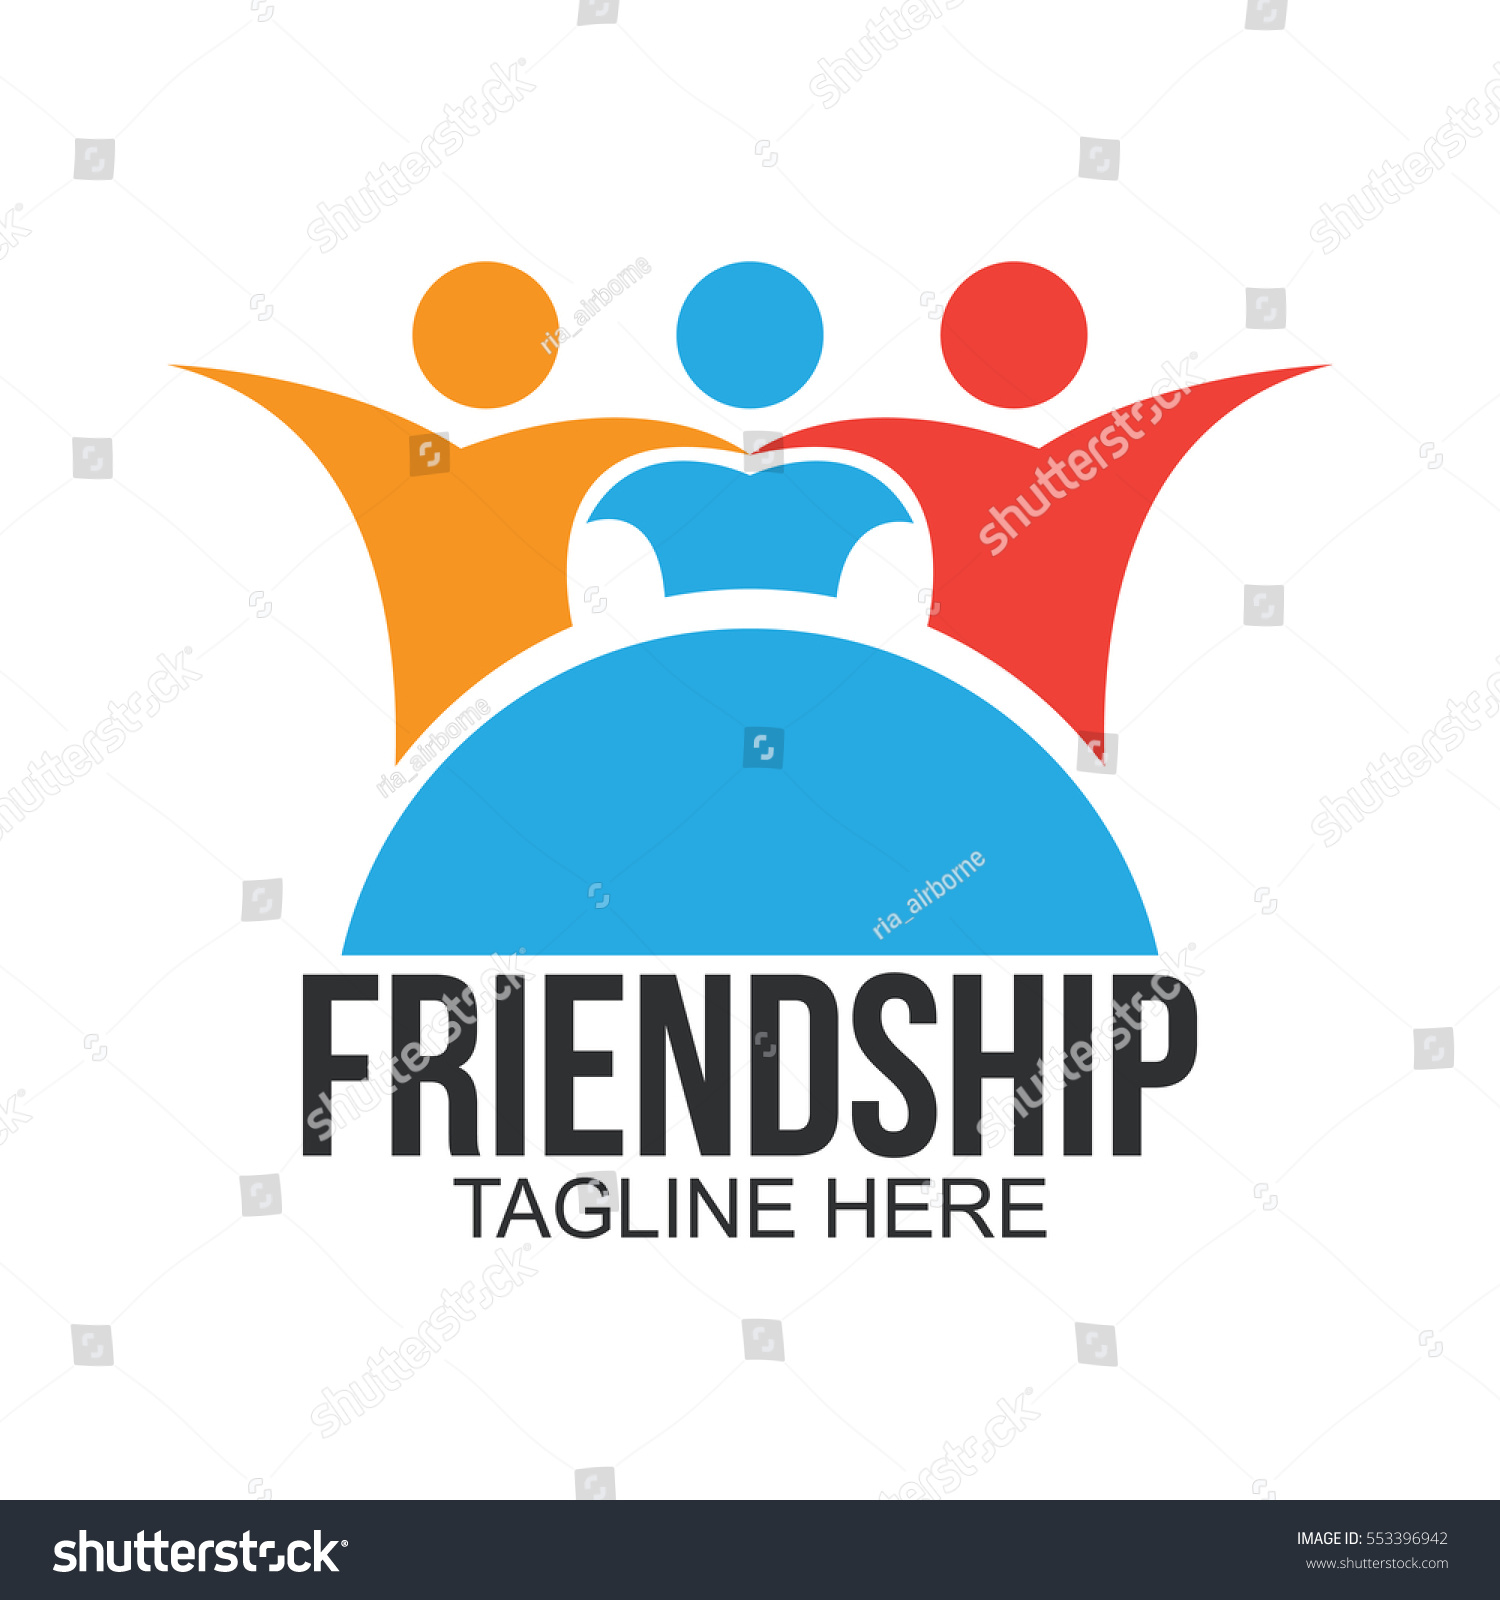 Friendship Logo Stock Vector Royalty Free